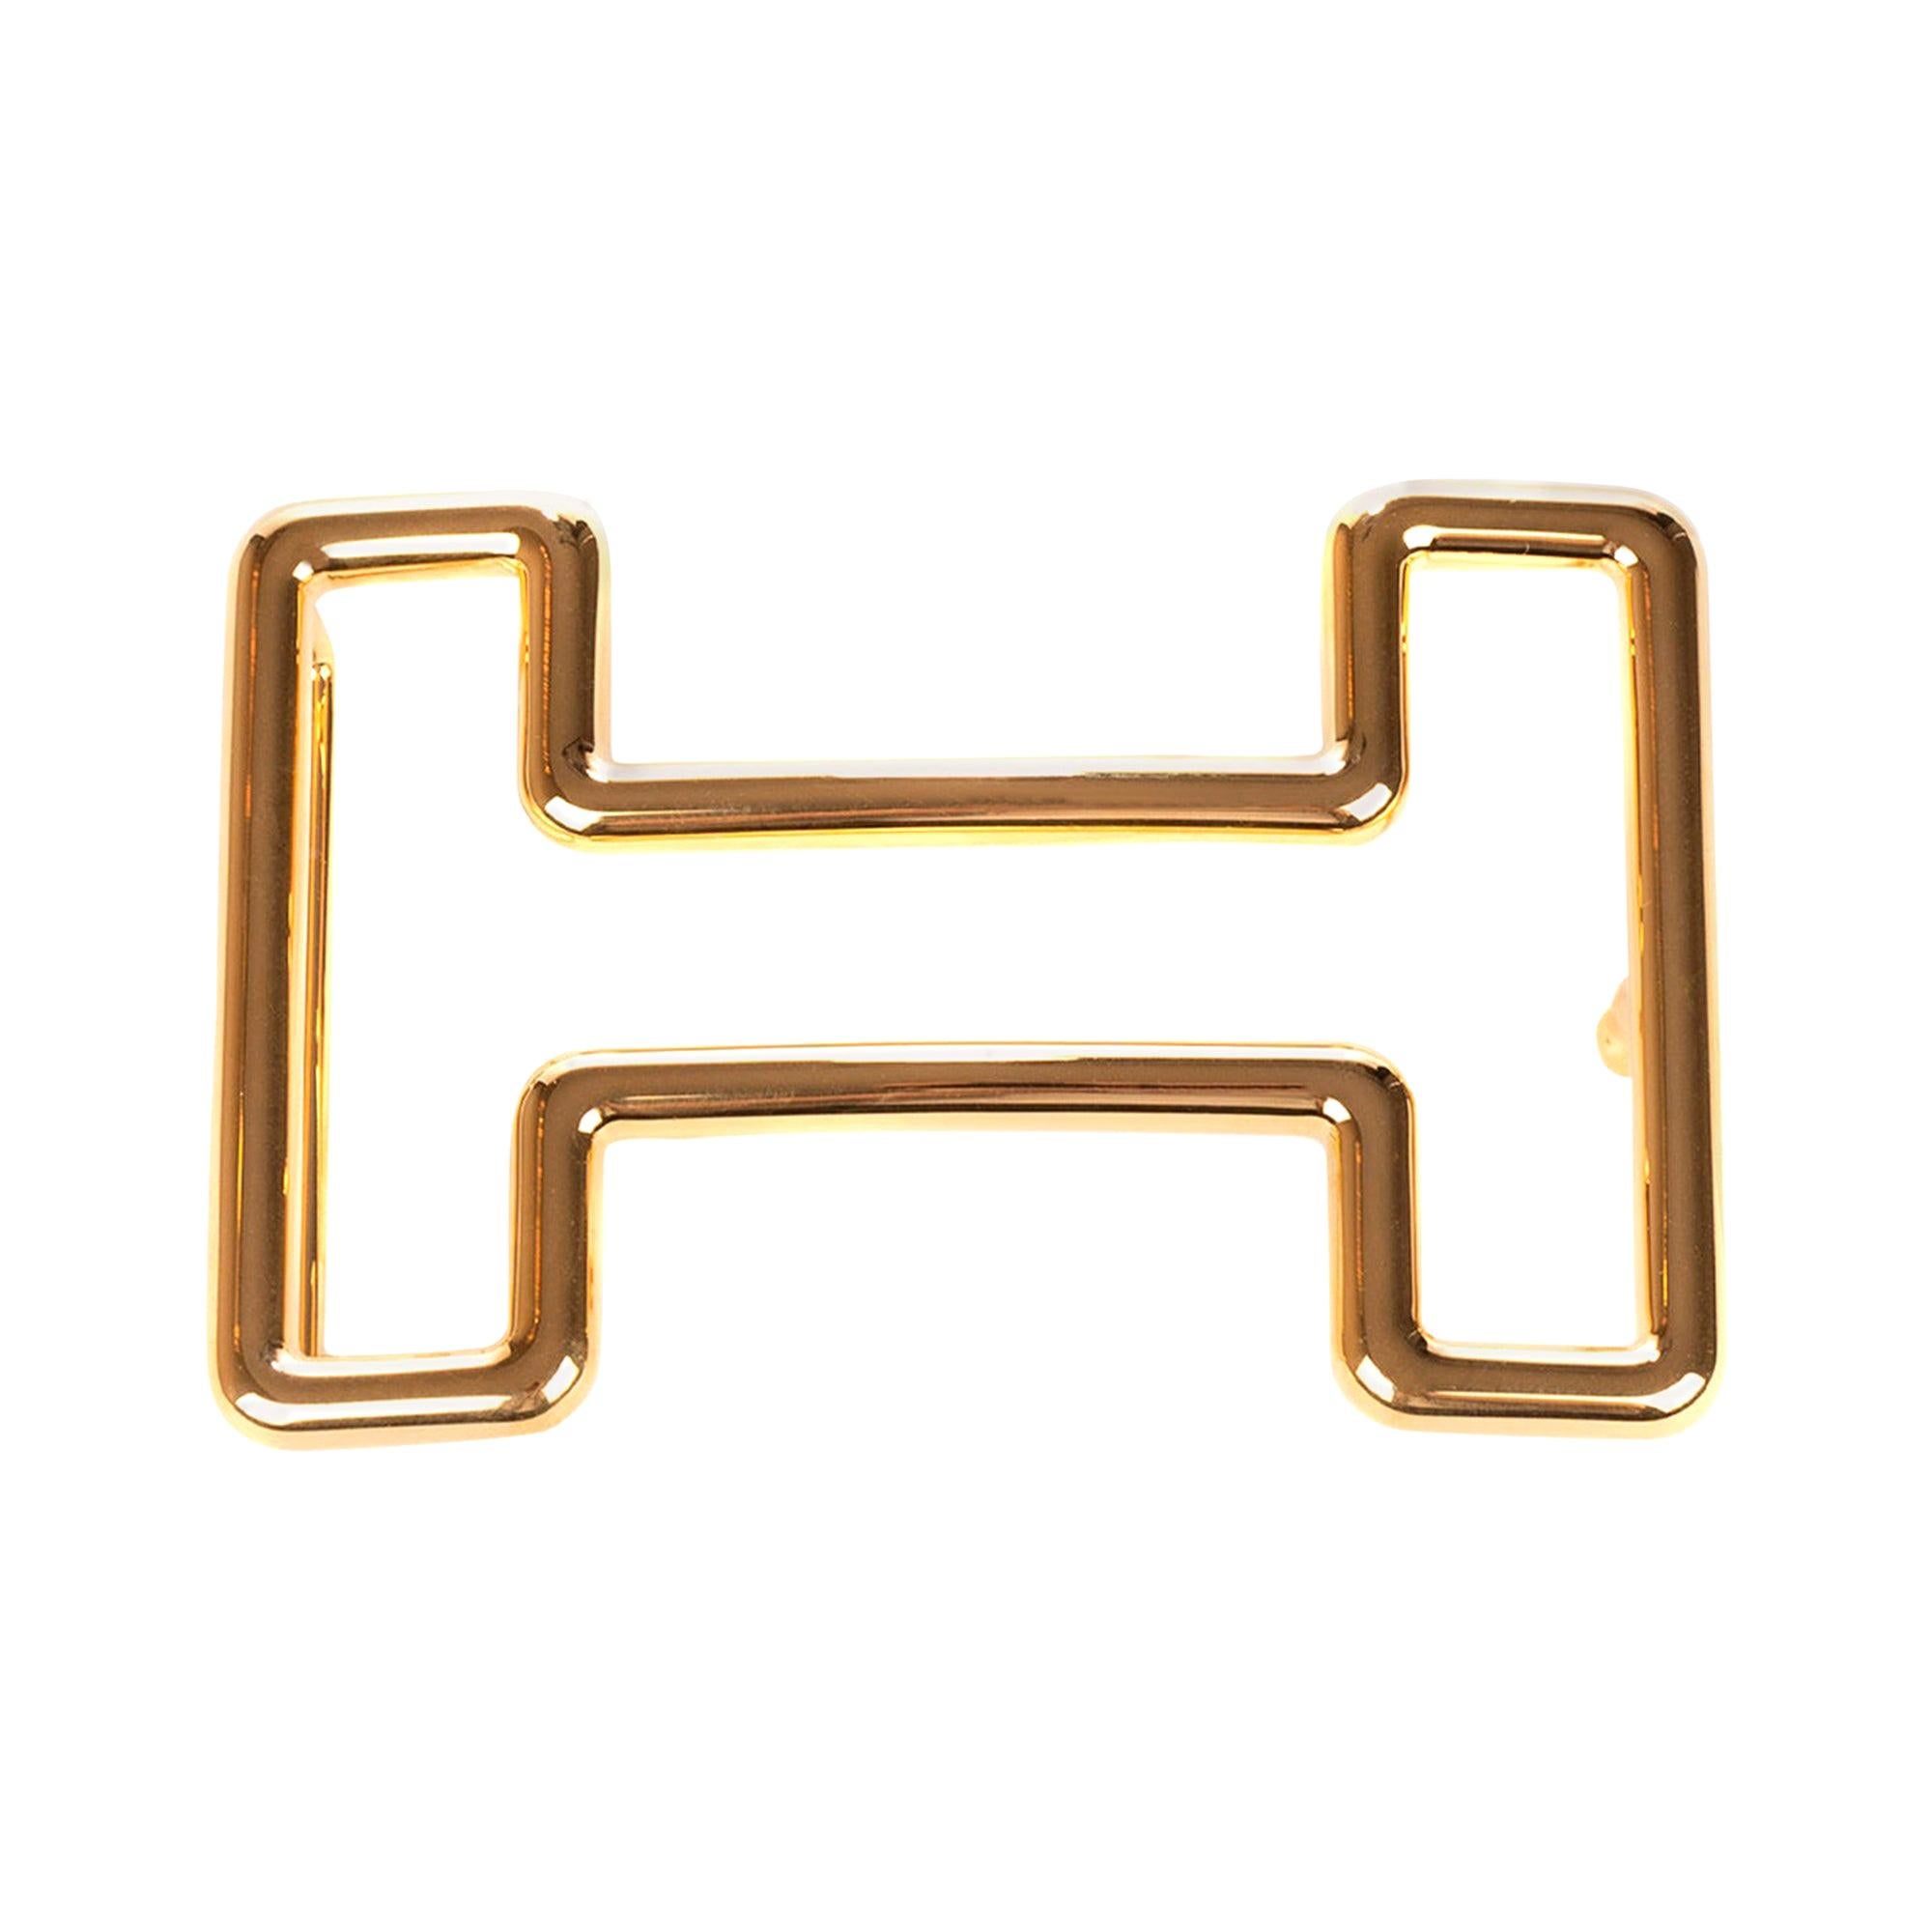 Brand new Hermès belt buckle model "Tonight" in shiny gold !